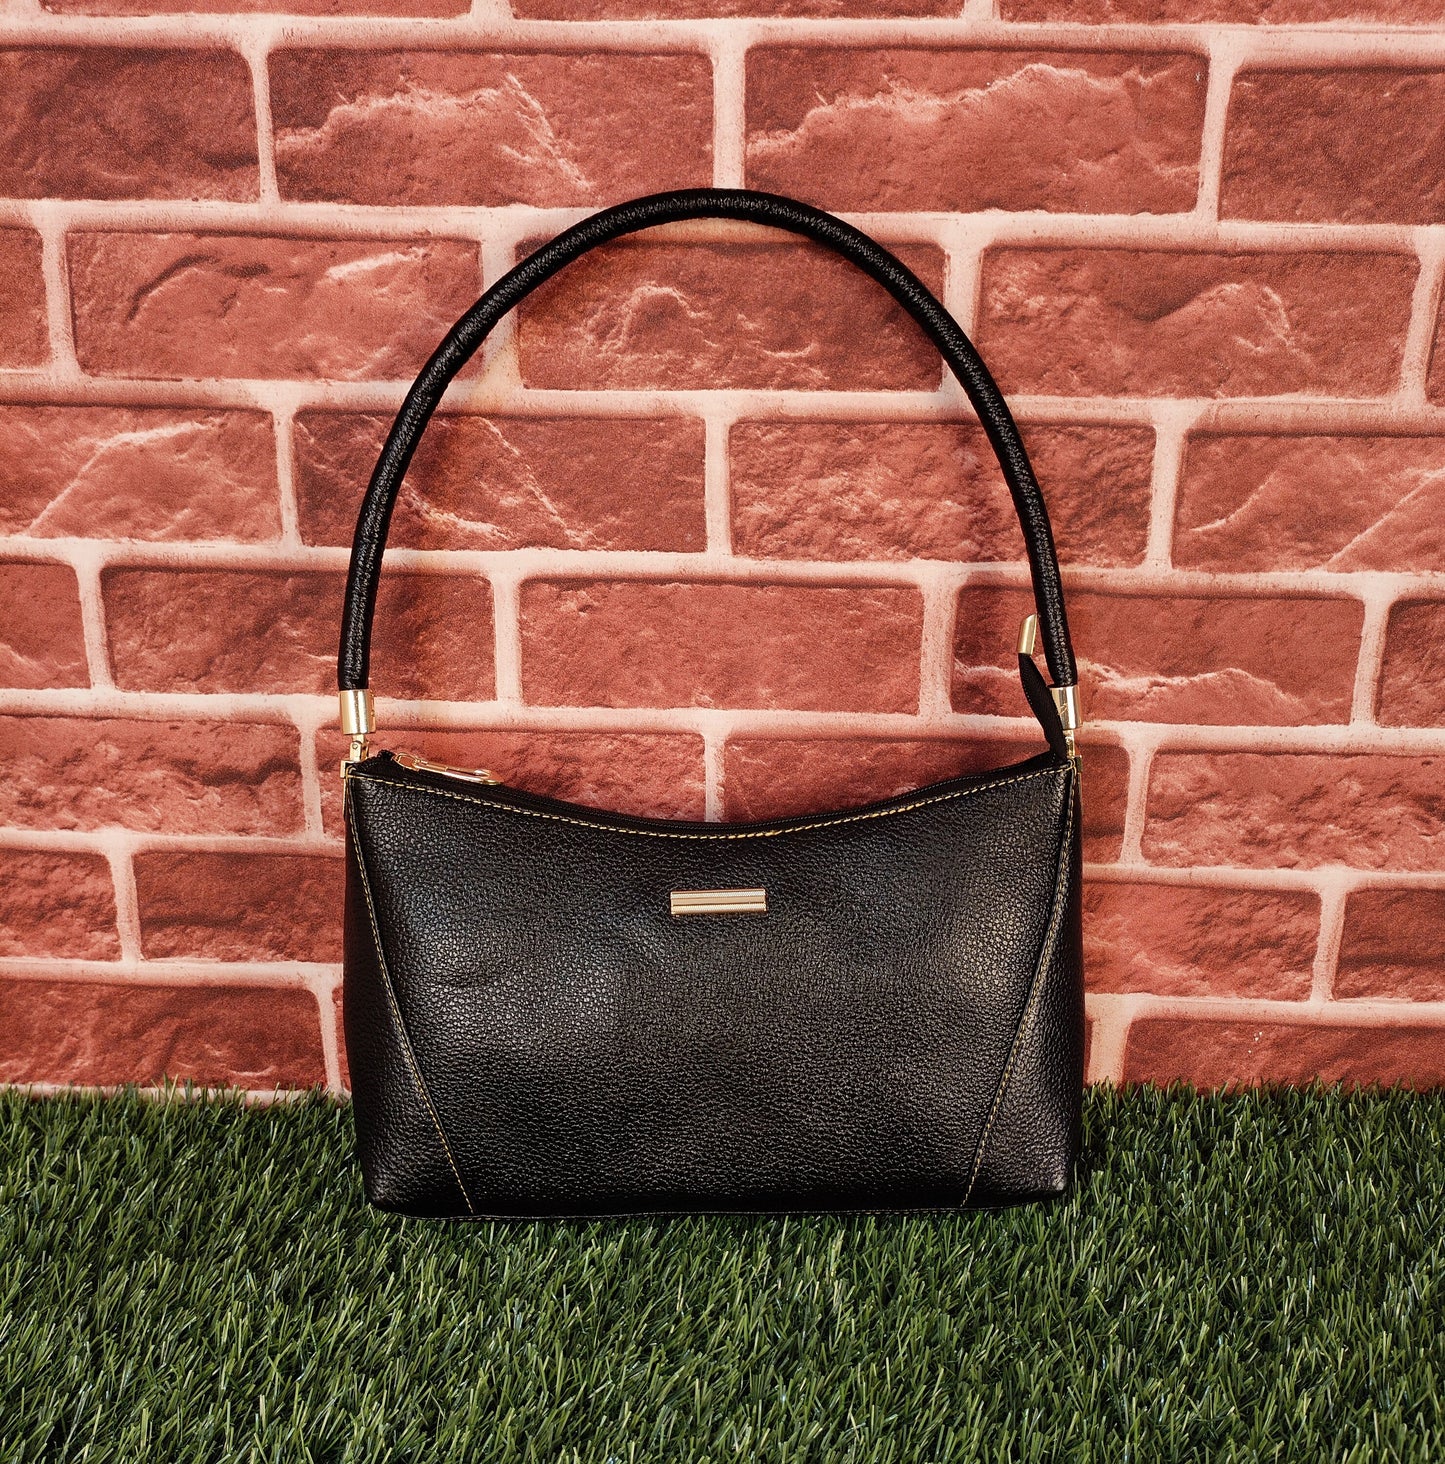 Black Leather Hobo Bag for Women's Leather Shoulder Bag, Shoulder Purse, Soft Leather Bag, Every Day Bag for Girls, Party Bag, Gift for Her